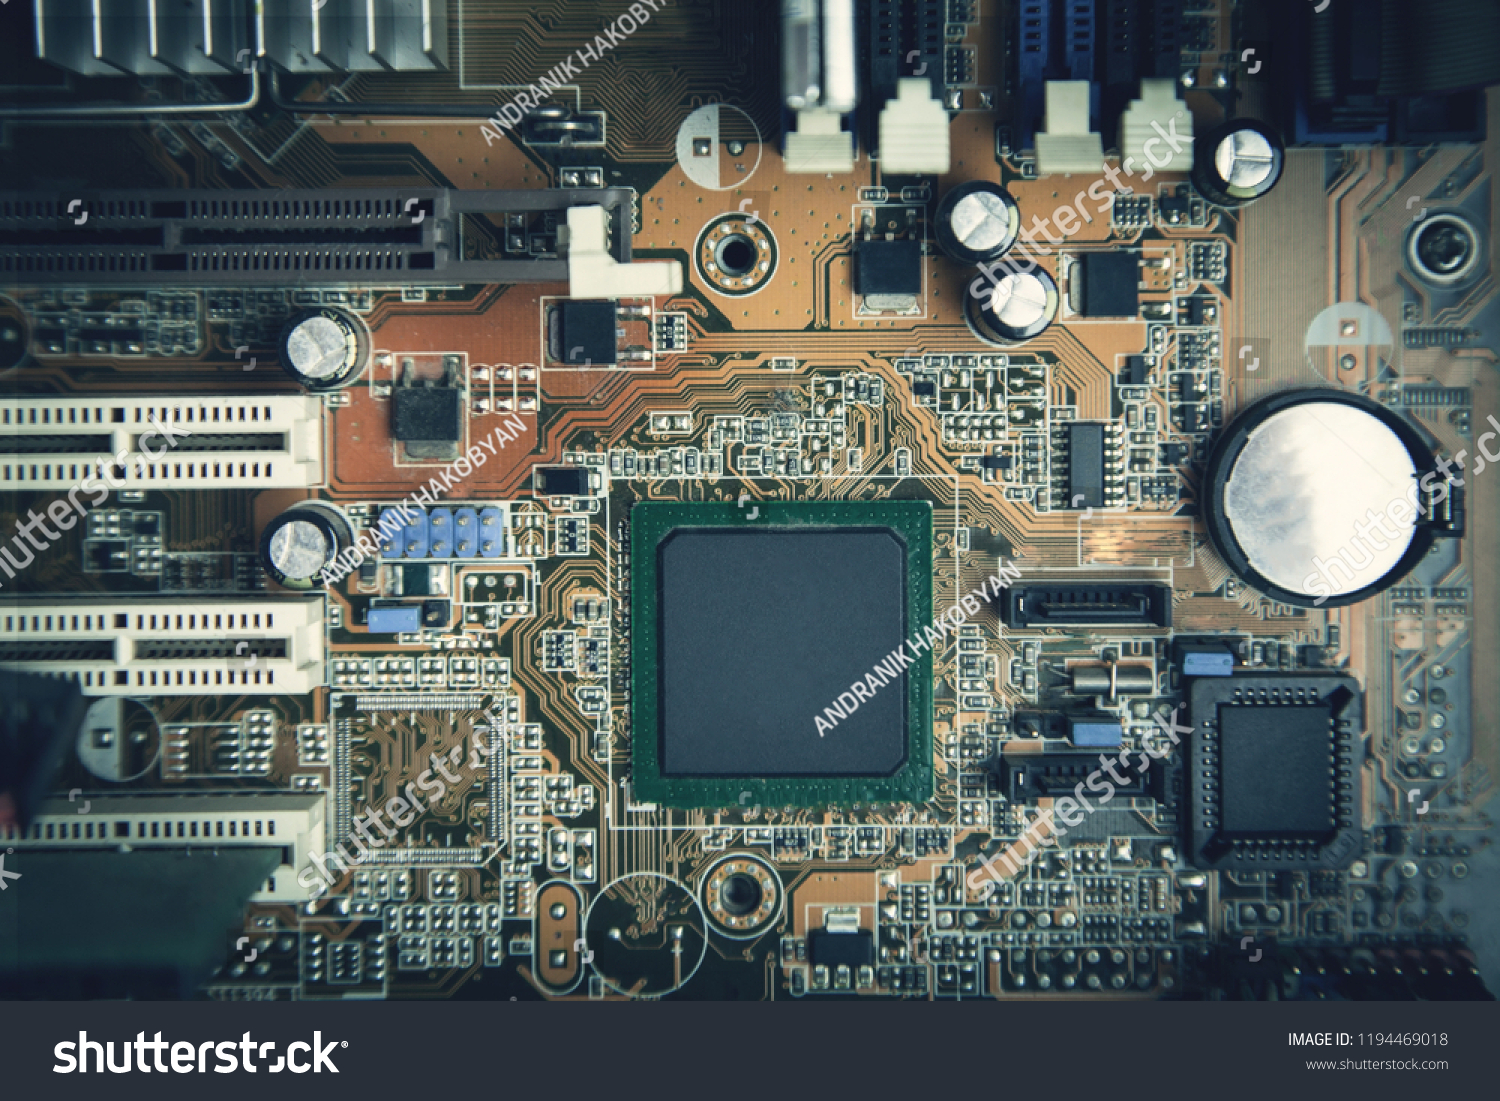 Computer motherboard. Motherboard digital chip. Technology background #1194469018